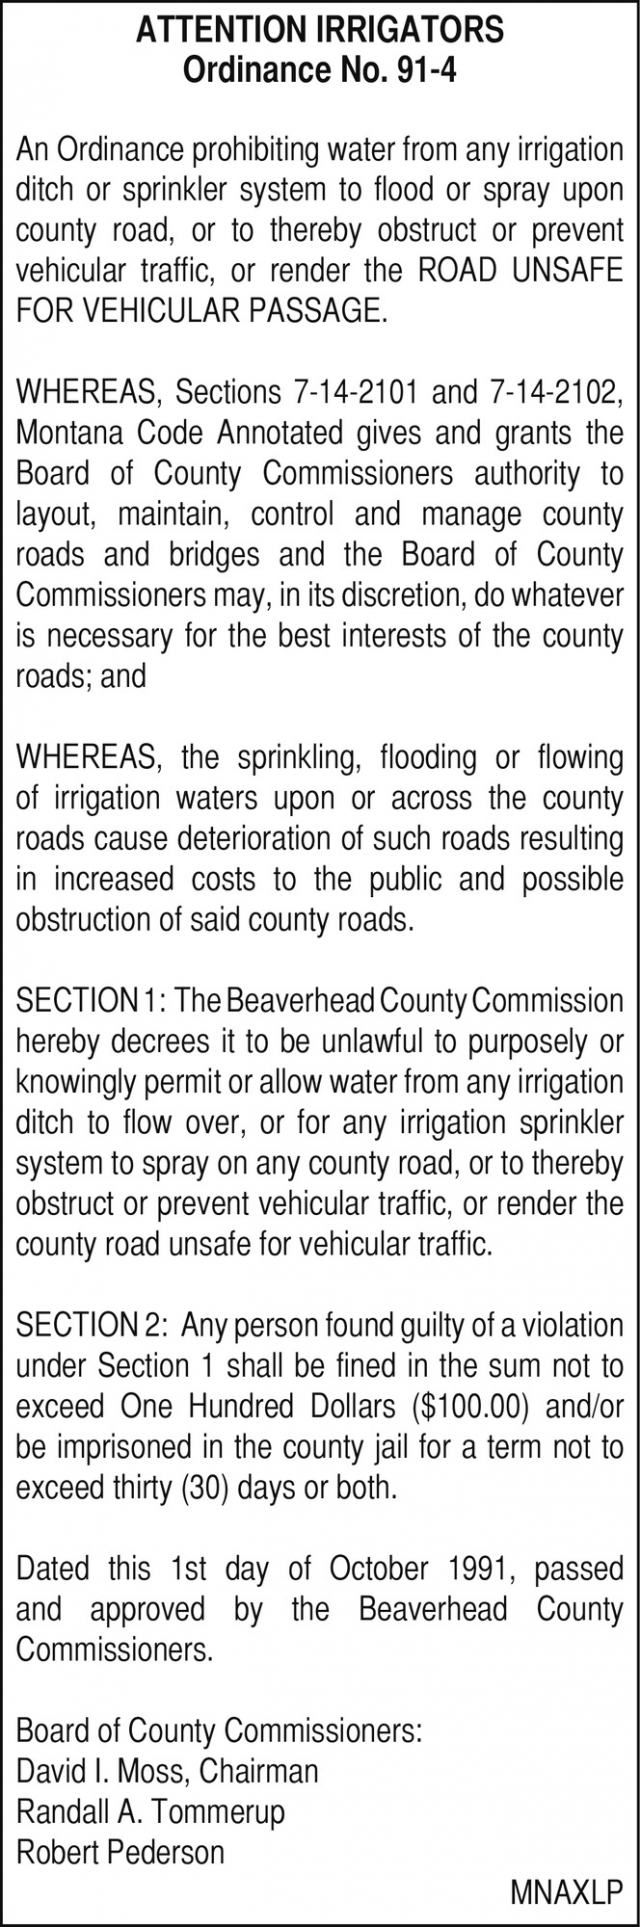 Attention Irrigators, Beaverhead County